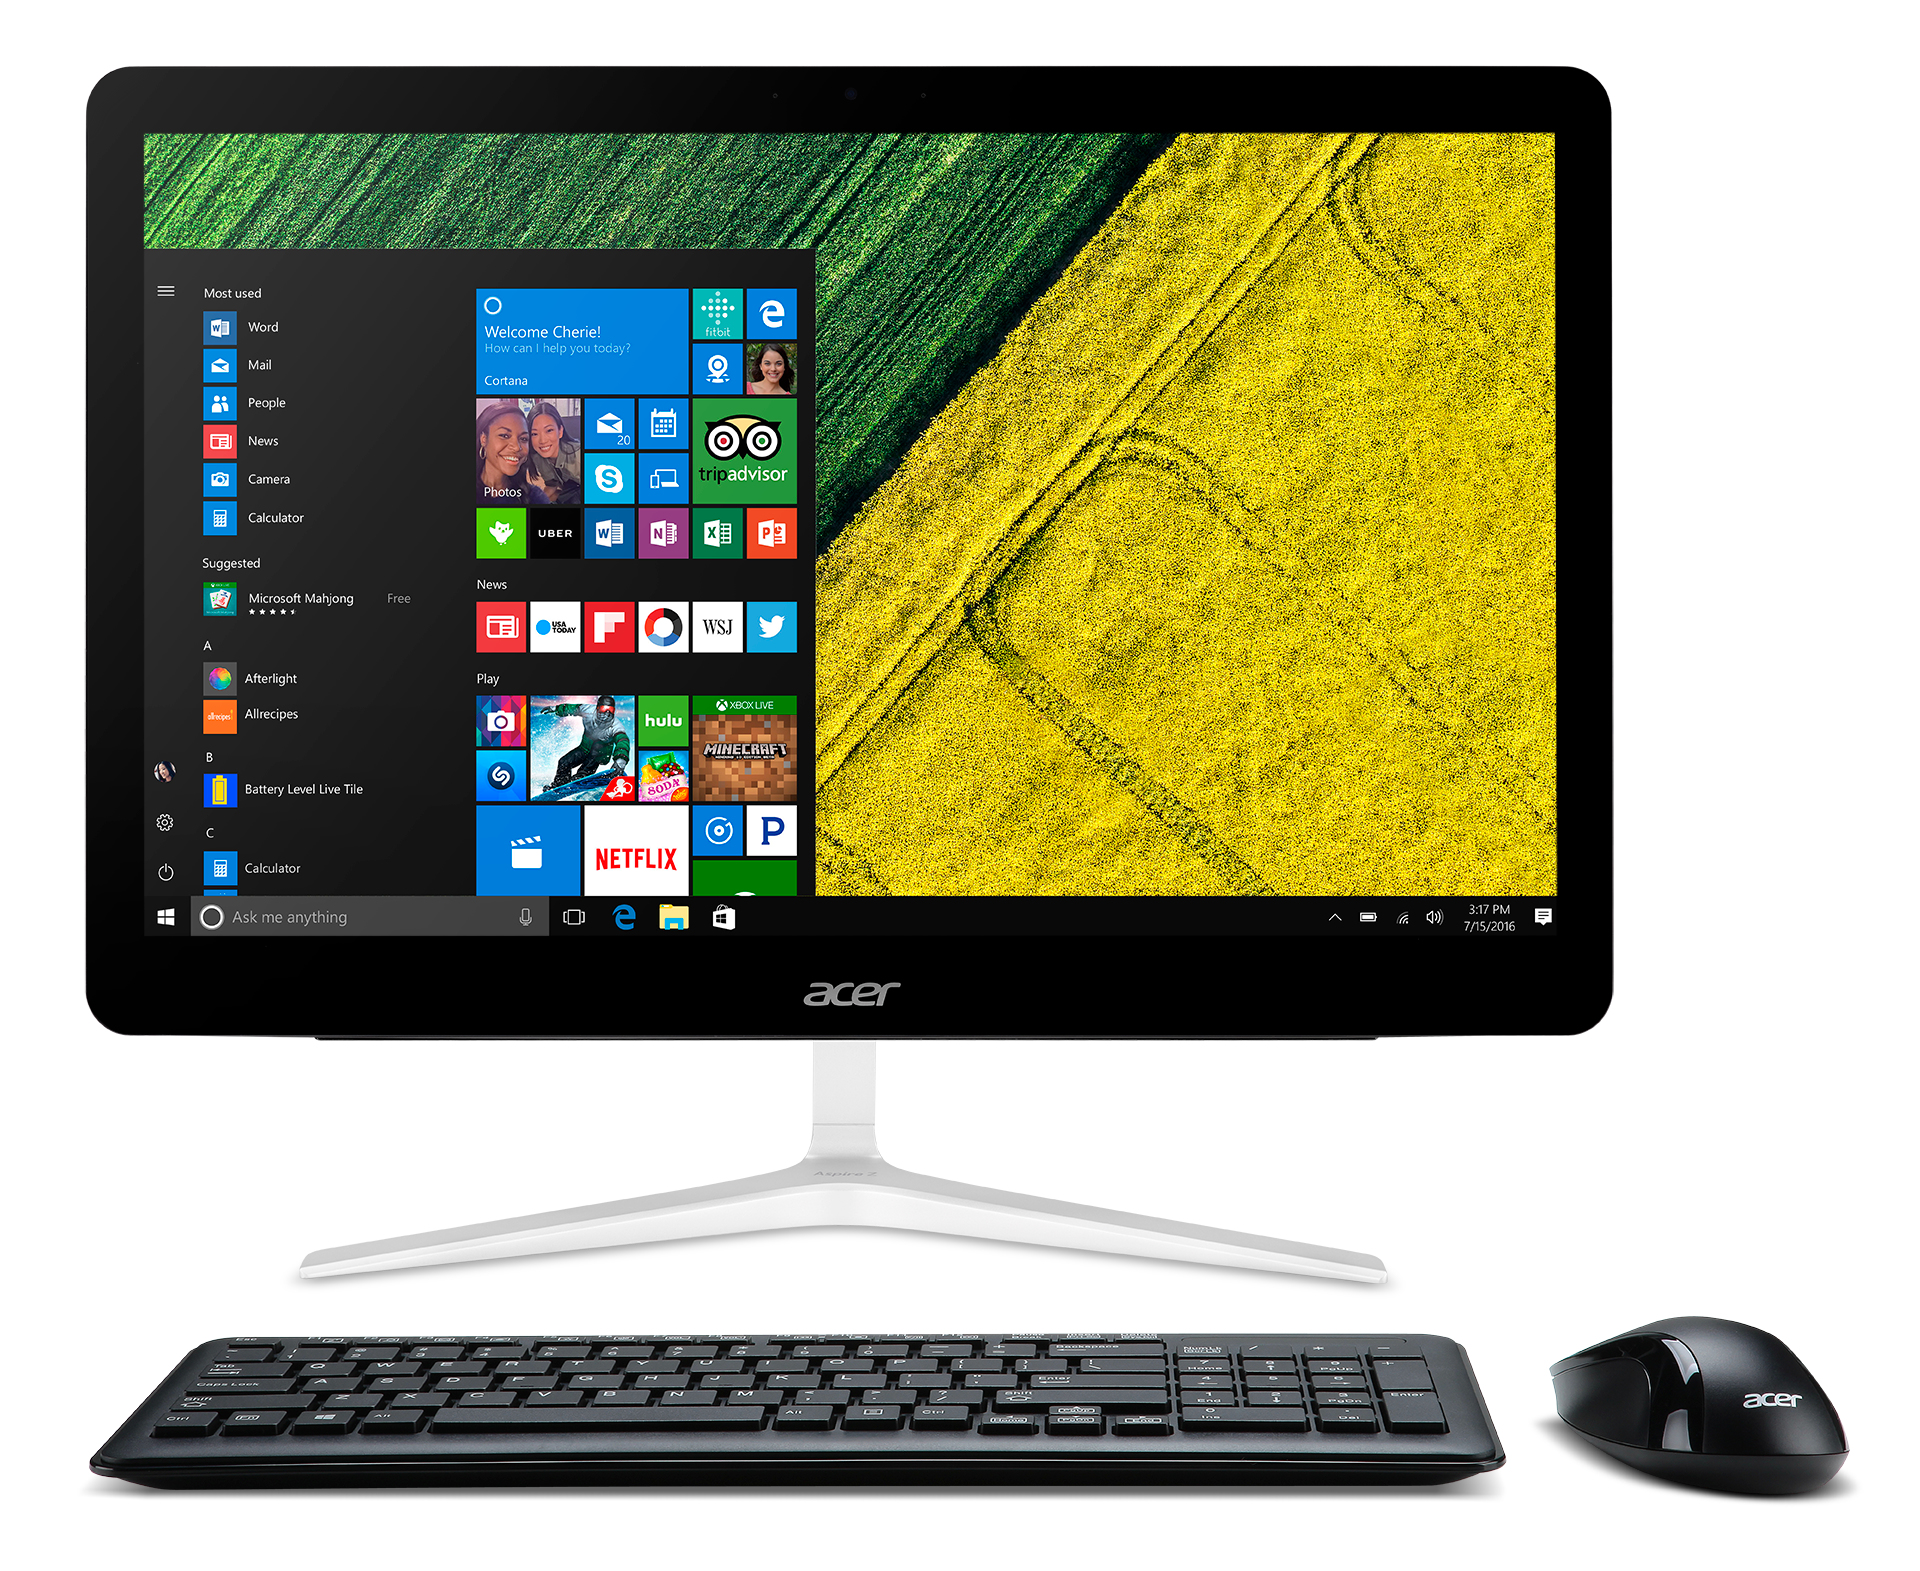 Acer Aspire Z24-880 I9818 NL